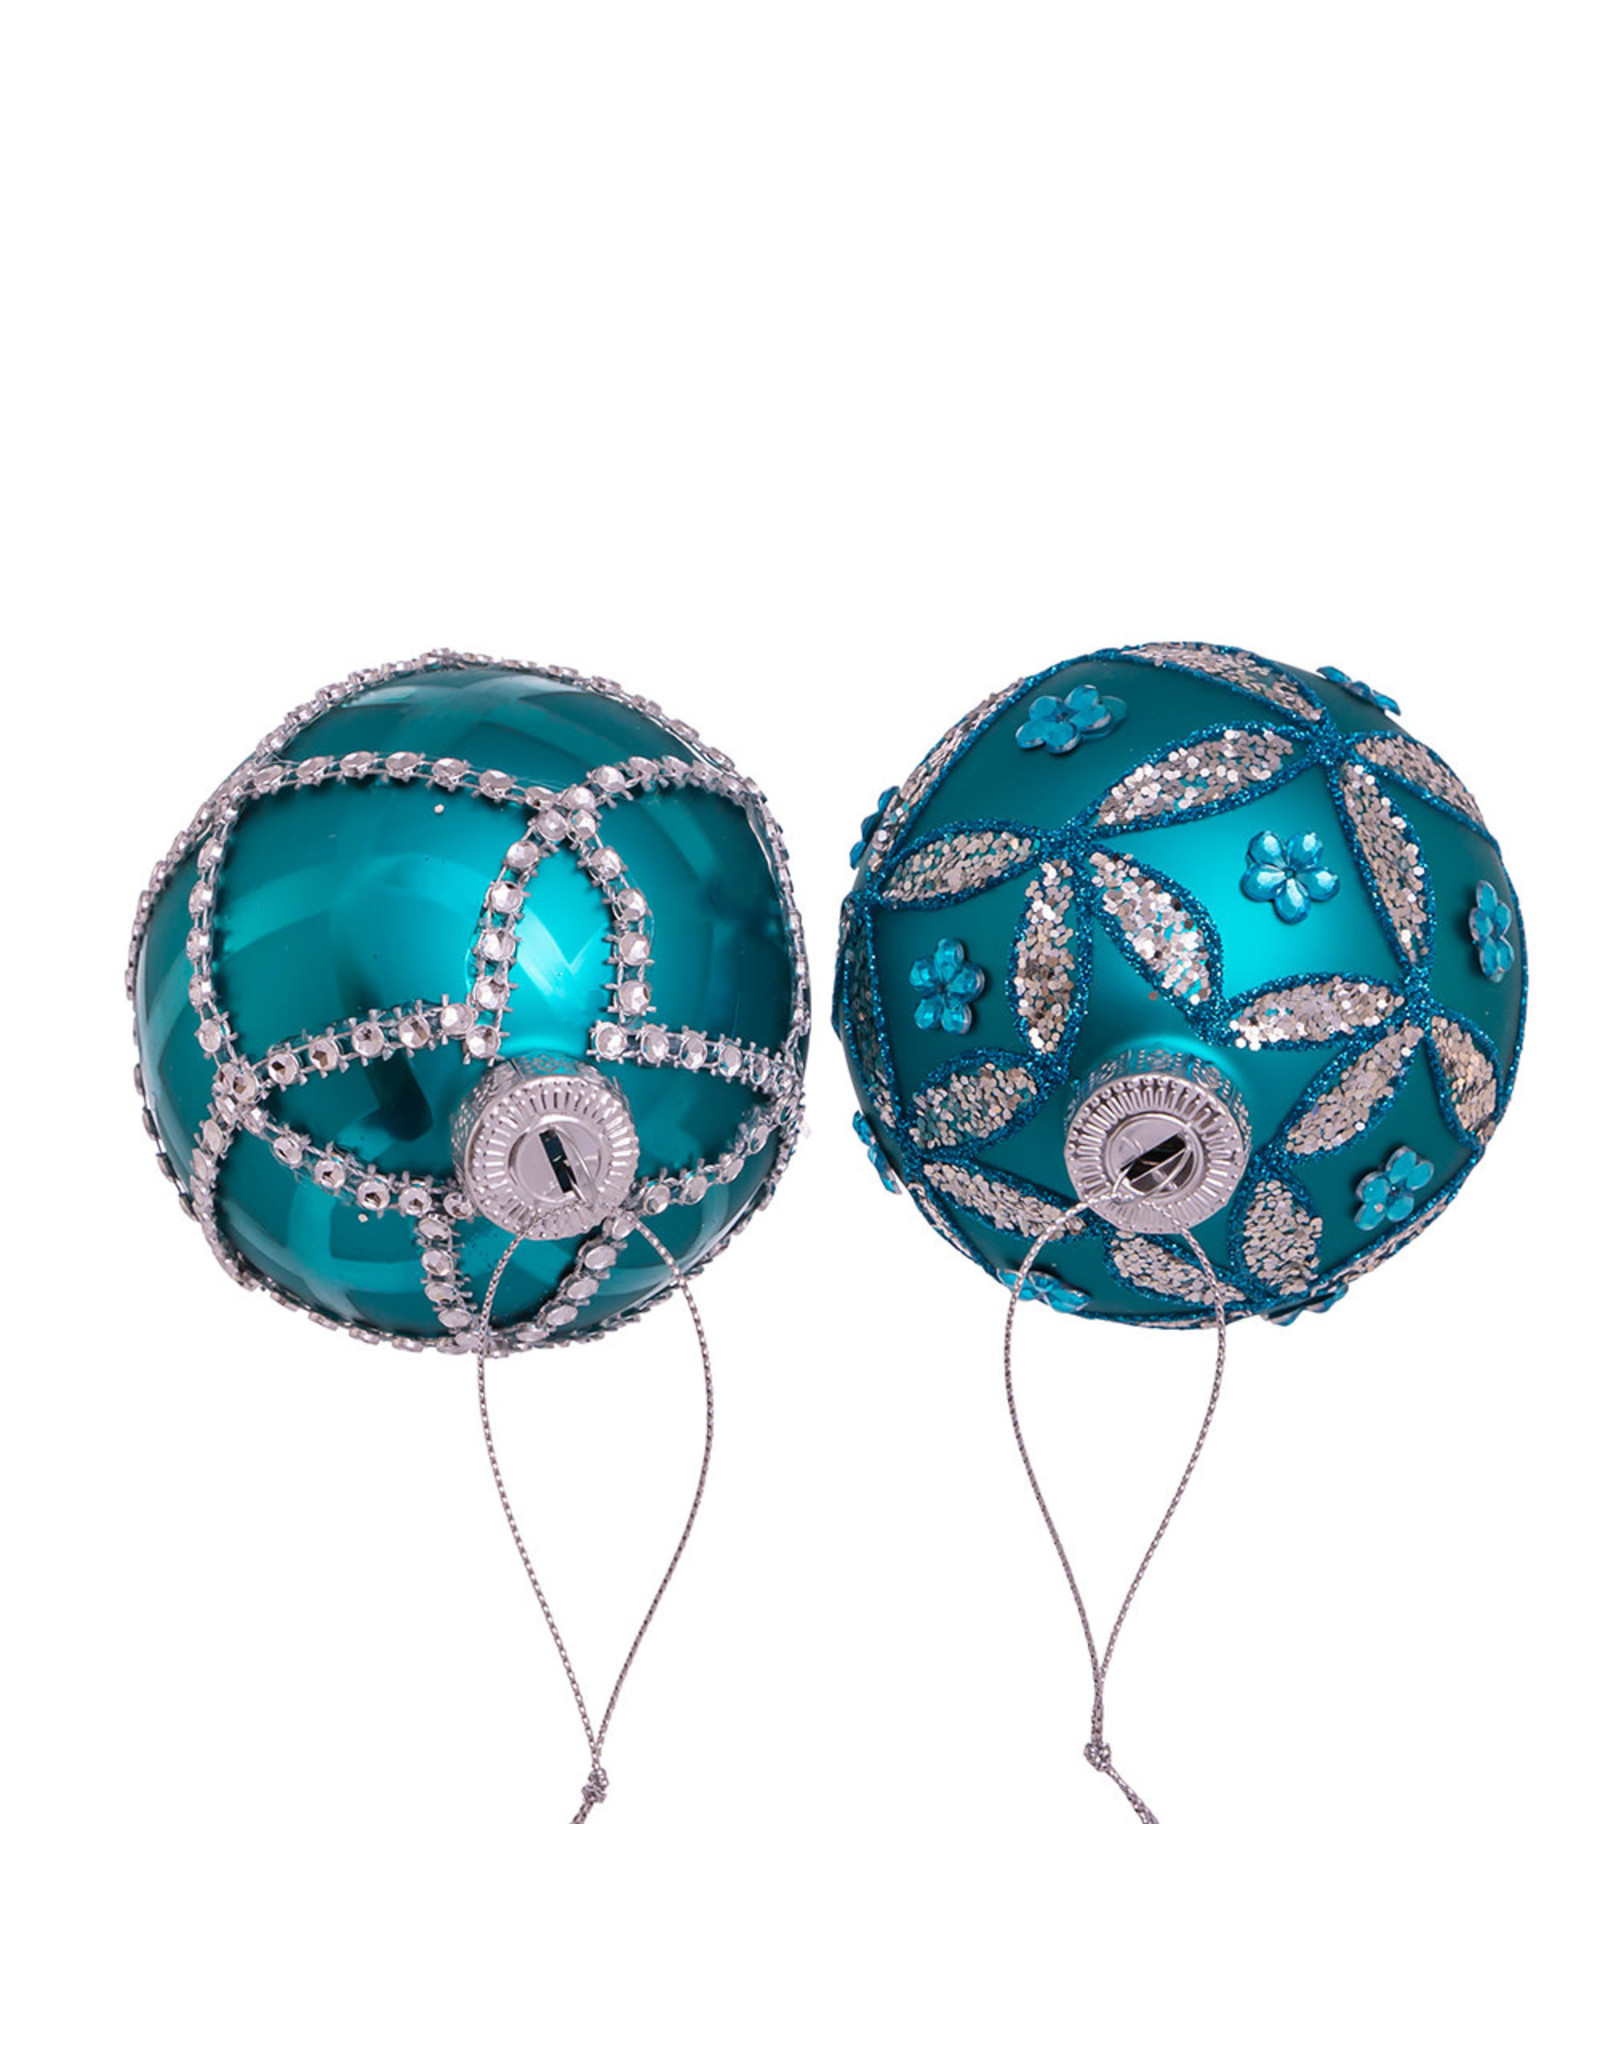 Kurt Adler Teal Glass Ball Ornaments W Embellishments Set of 6